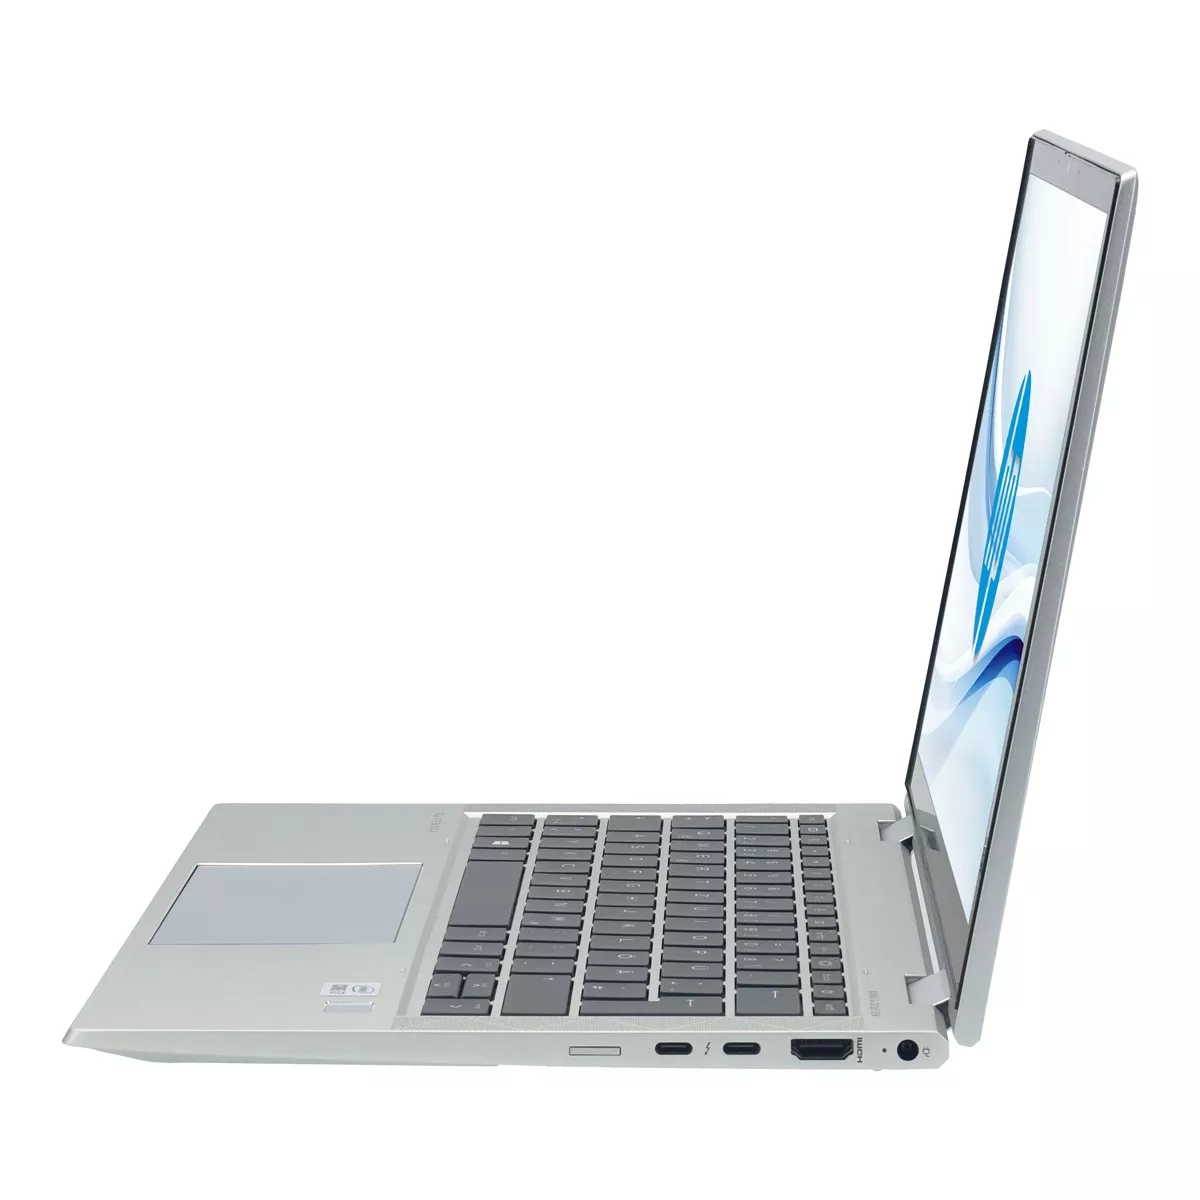 HP EliteBook x360 830 G7 Core i7 10510U 16 GB 500 GB M.2 nVME SSD Touch Webcam B